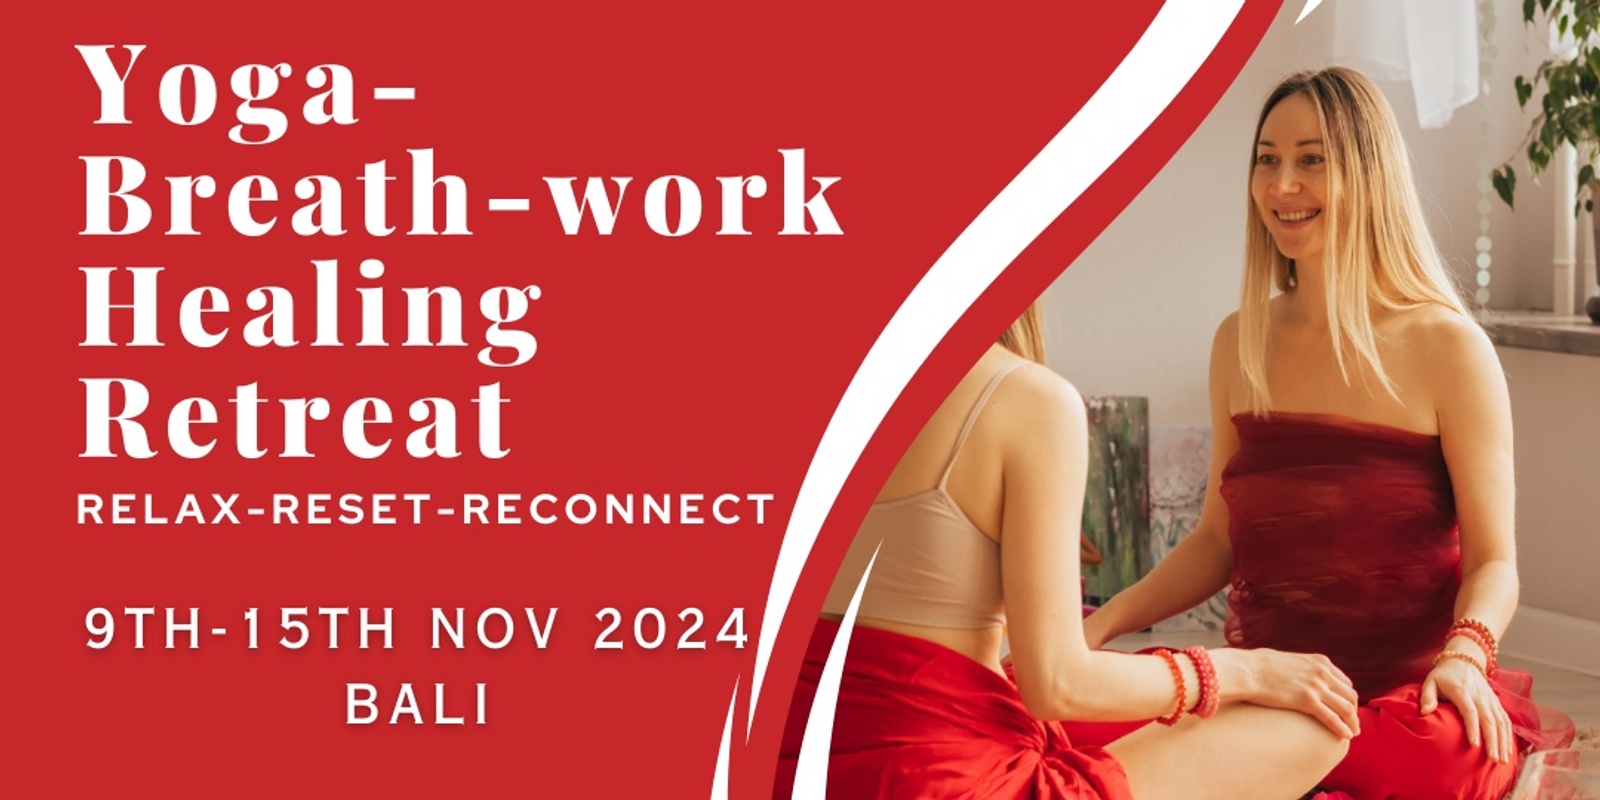 Banner image for Yoga-Breath-work-Healing Retreat in Bali November 2024